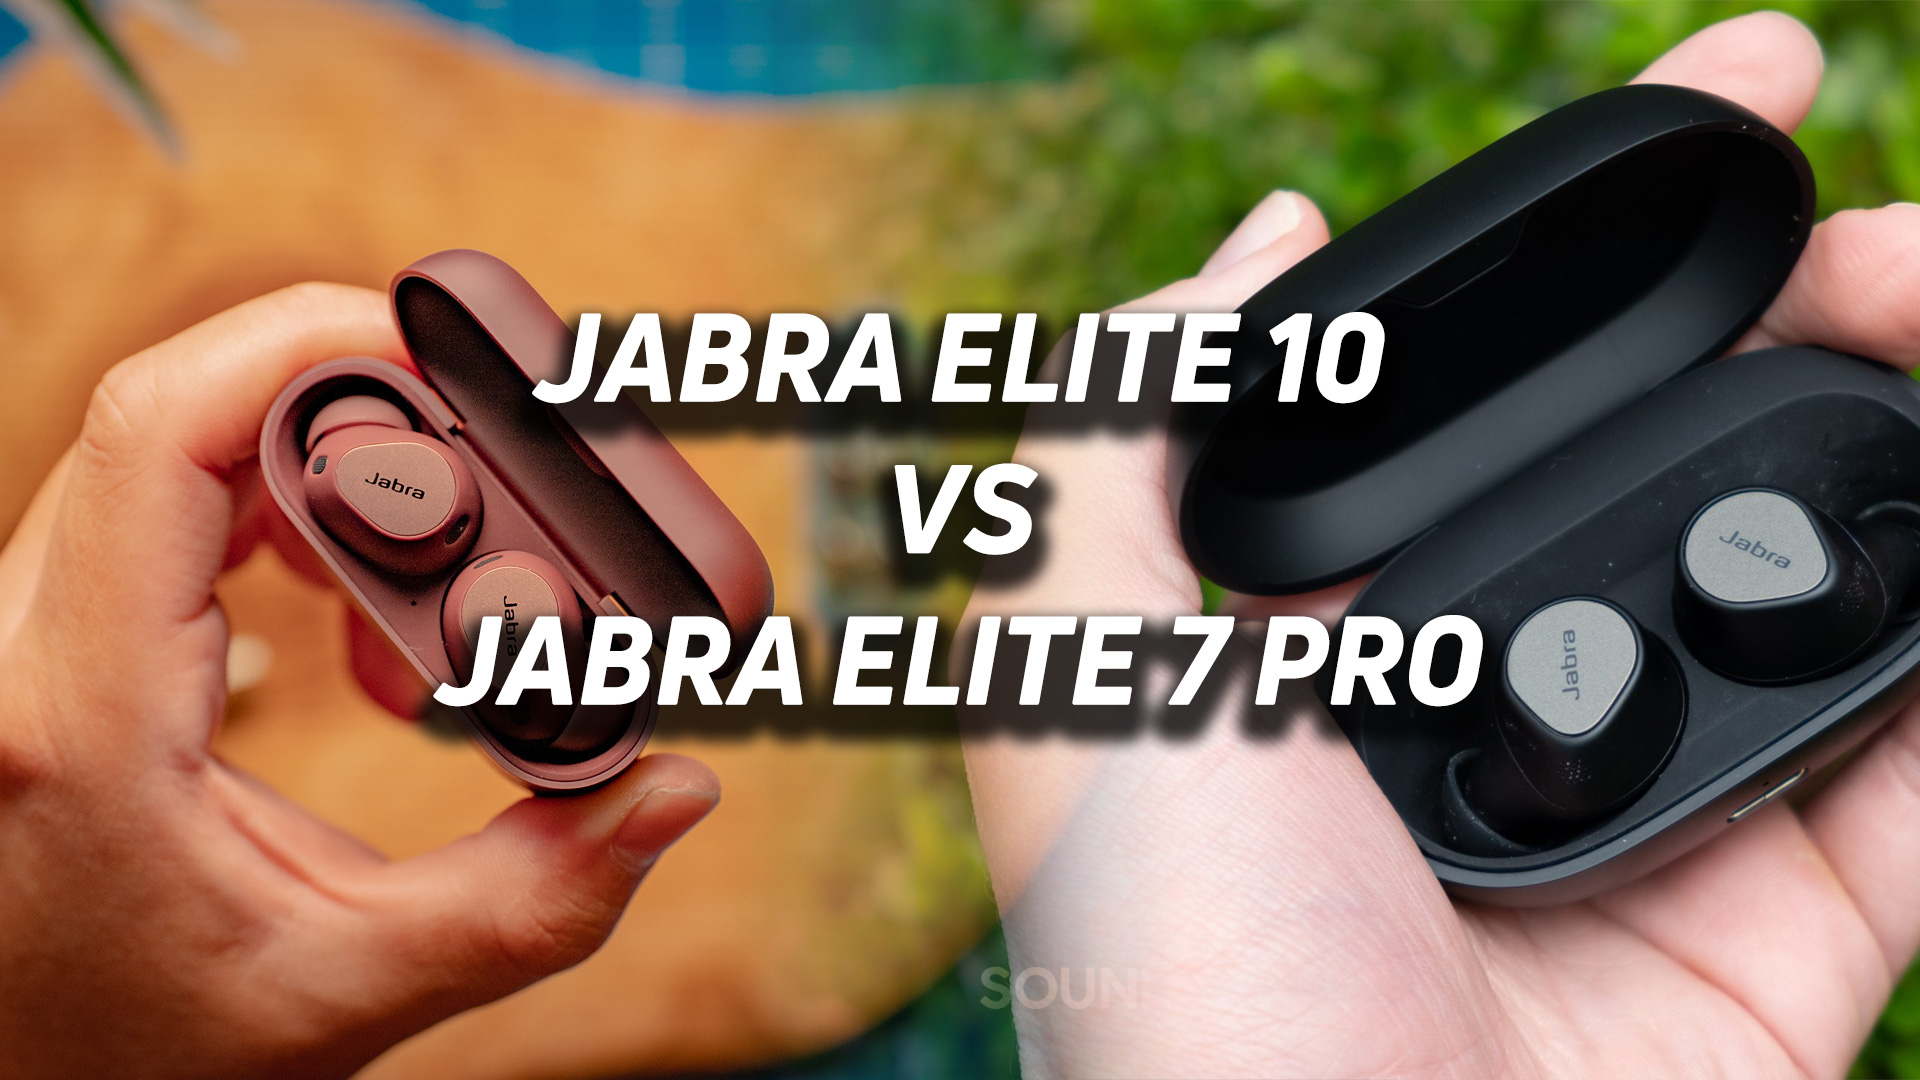 Jabra Elite 7 Pro Reviews, Pros and Cons